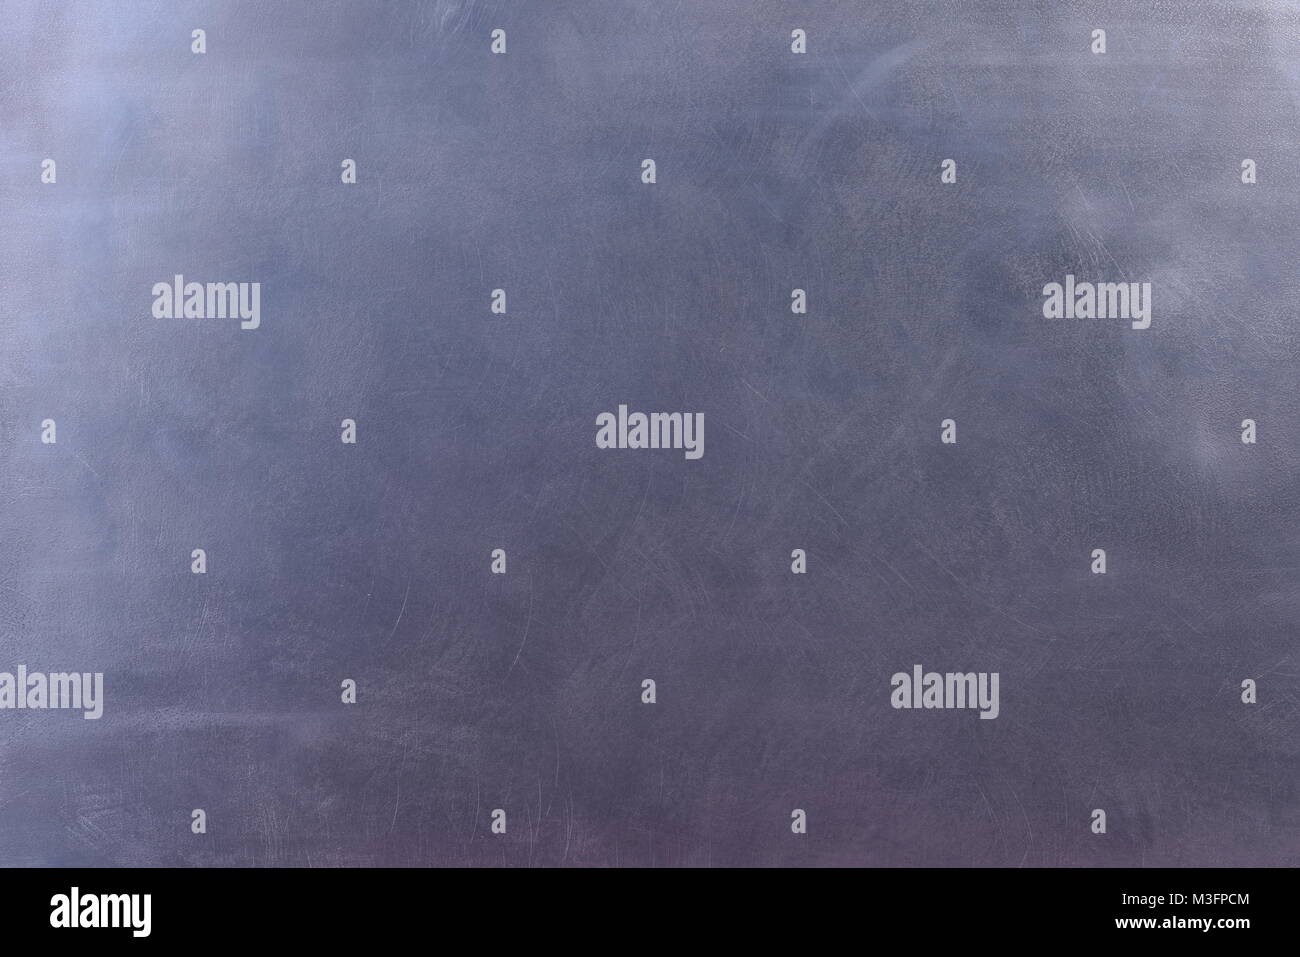 Grunge gray metal plate background Stock Photo